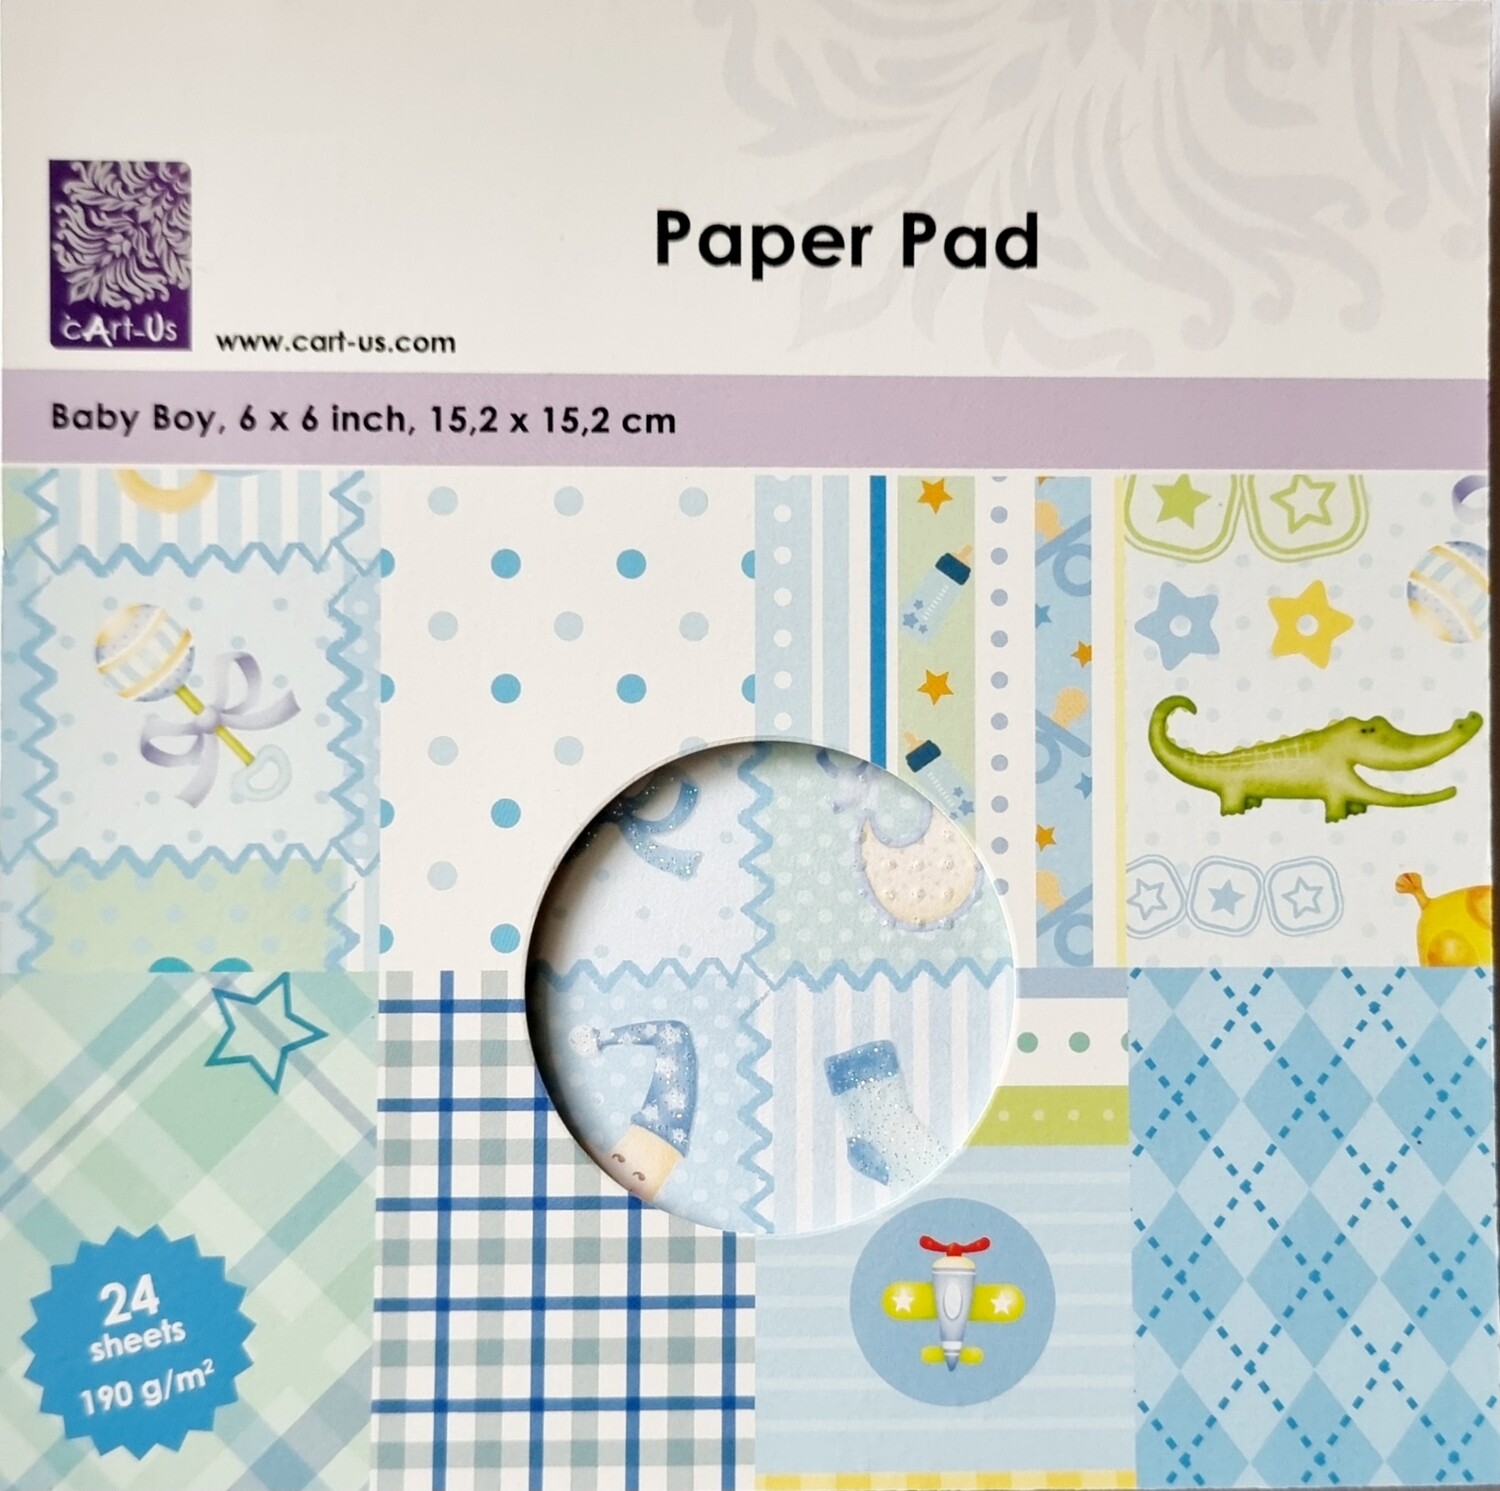 Paper Pad Baby Boy 6 x 6 inch